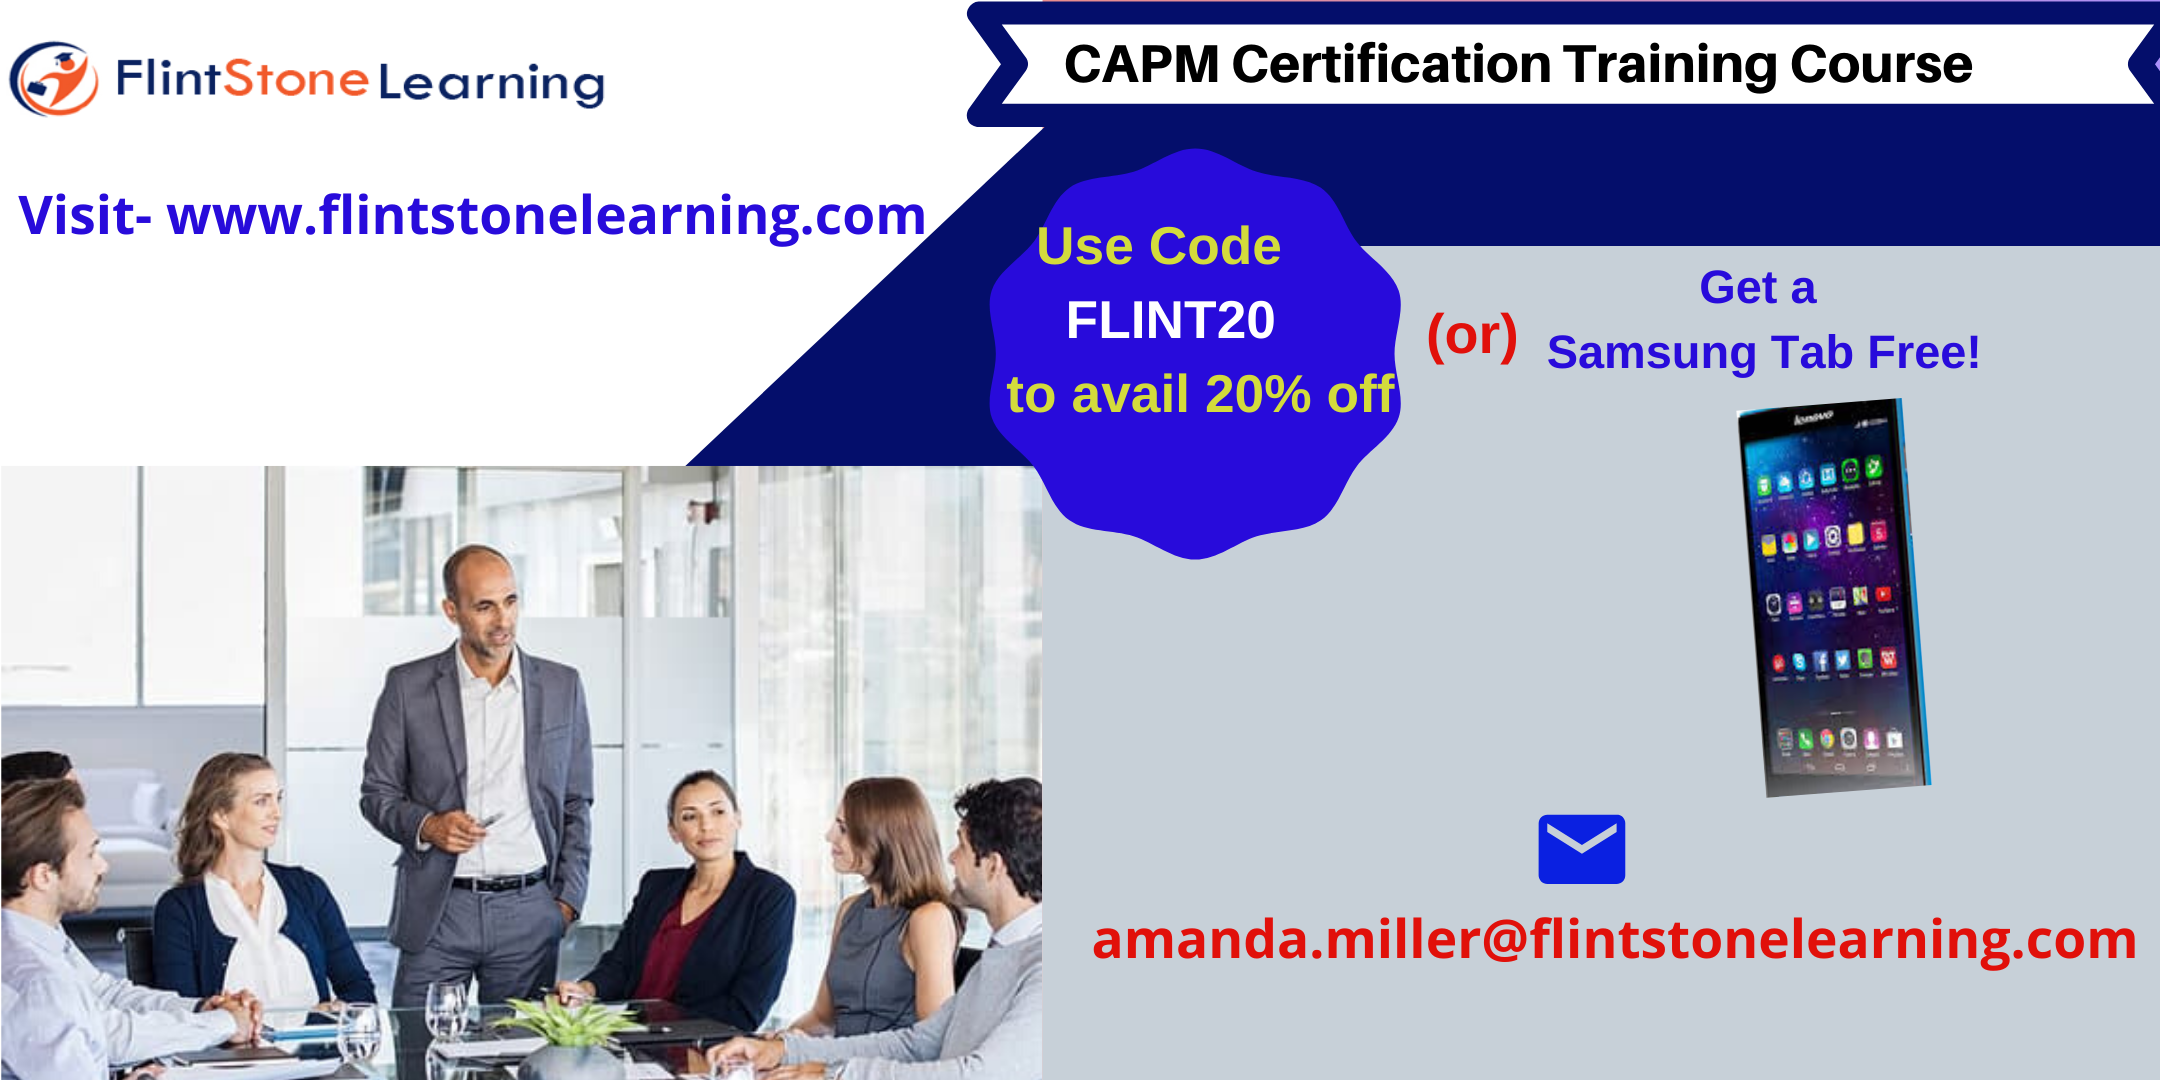 CAPM Certification Training Course in La Jolla, CA